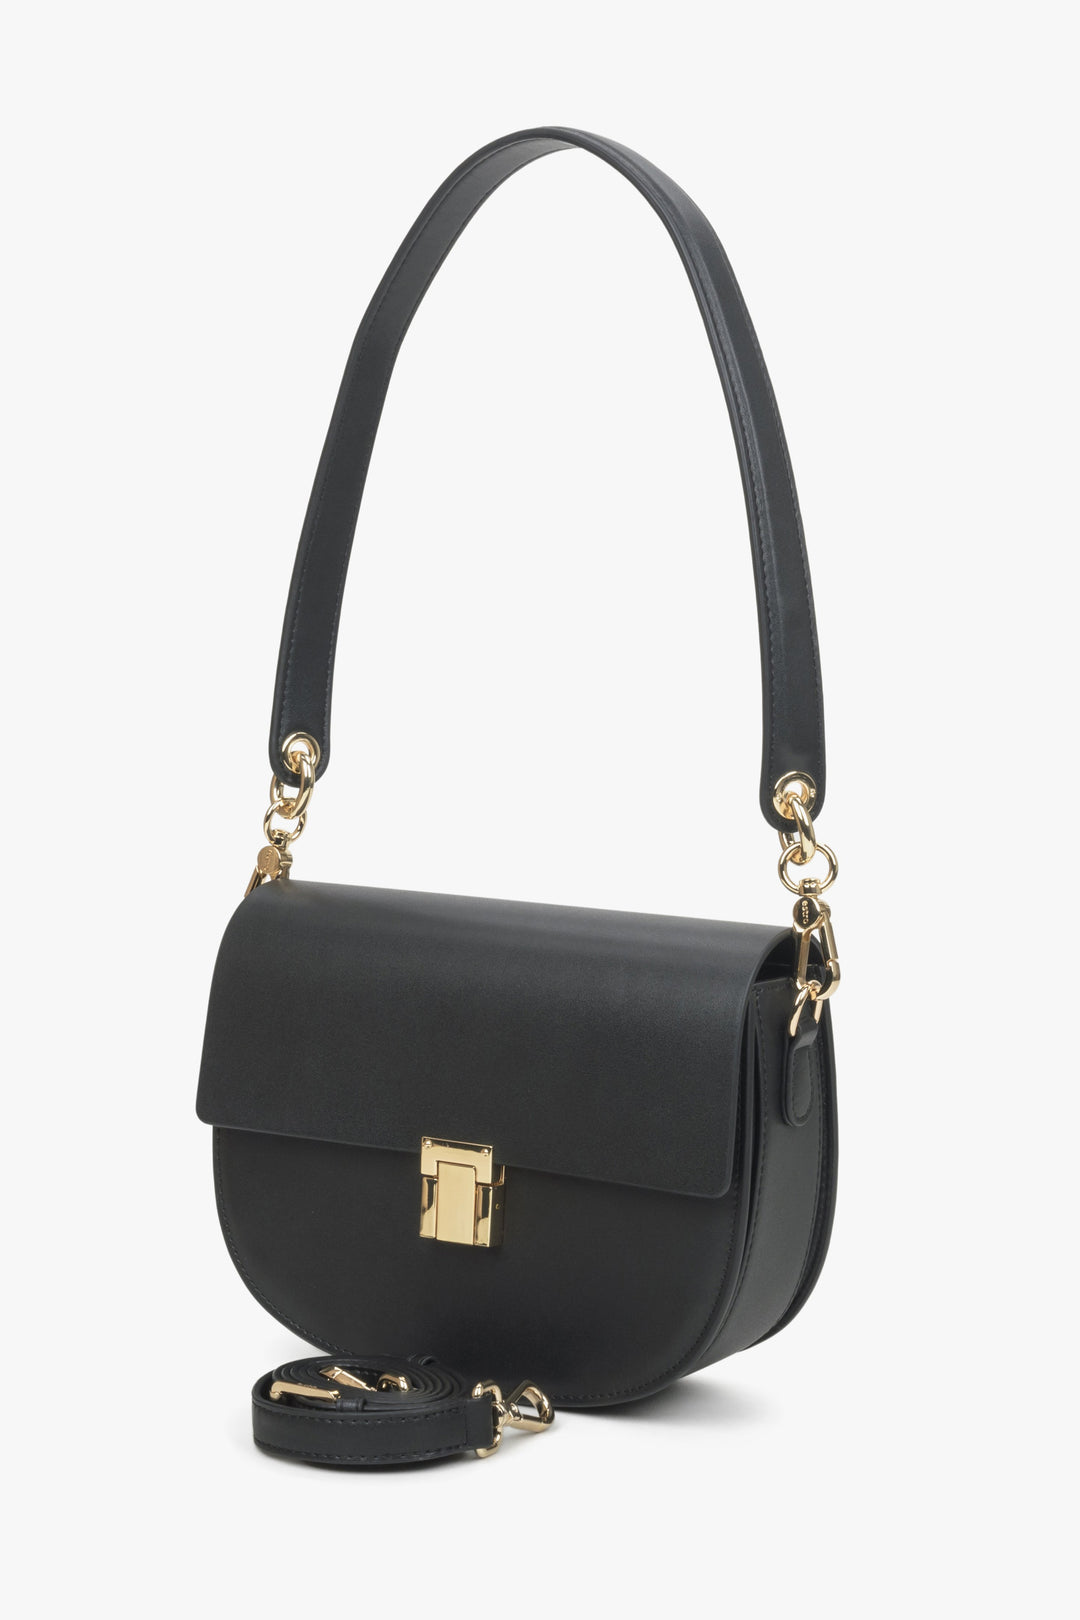 Estro women's leather bag in black.